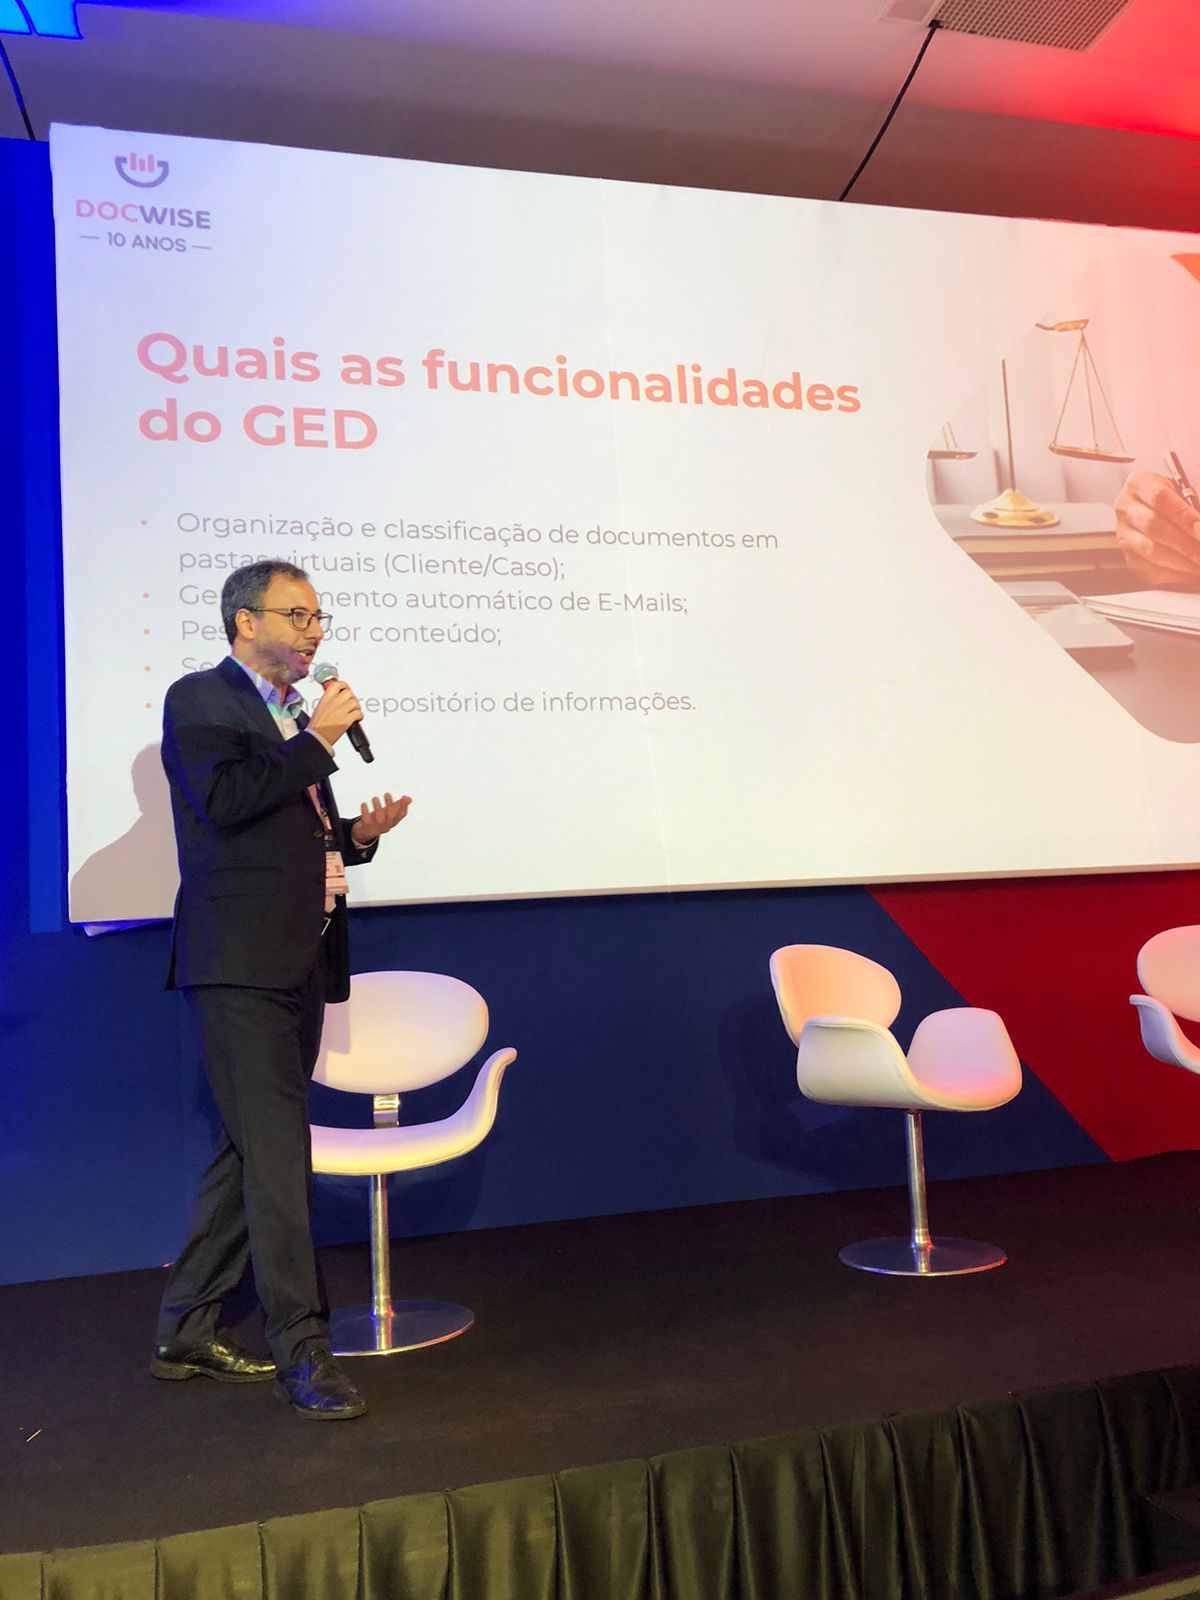 Carlos Machado, CEO da Docwise, explicando as funcionalidades do GED